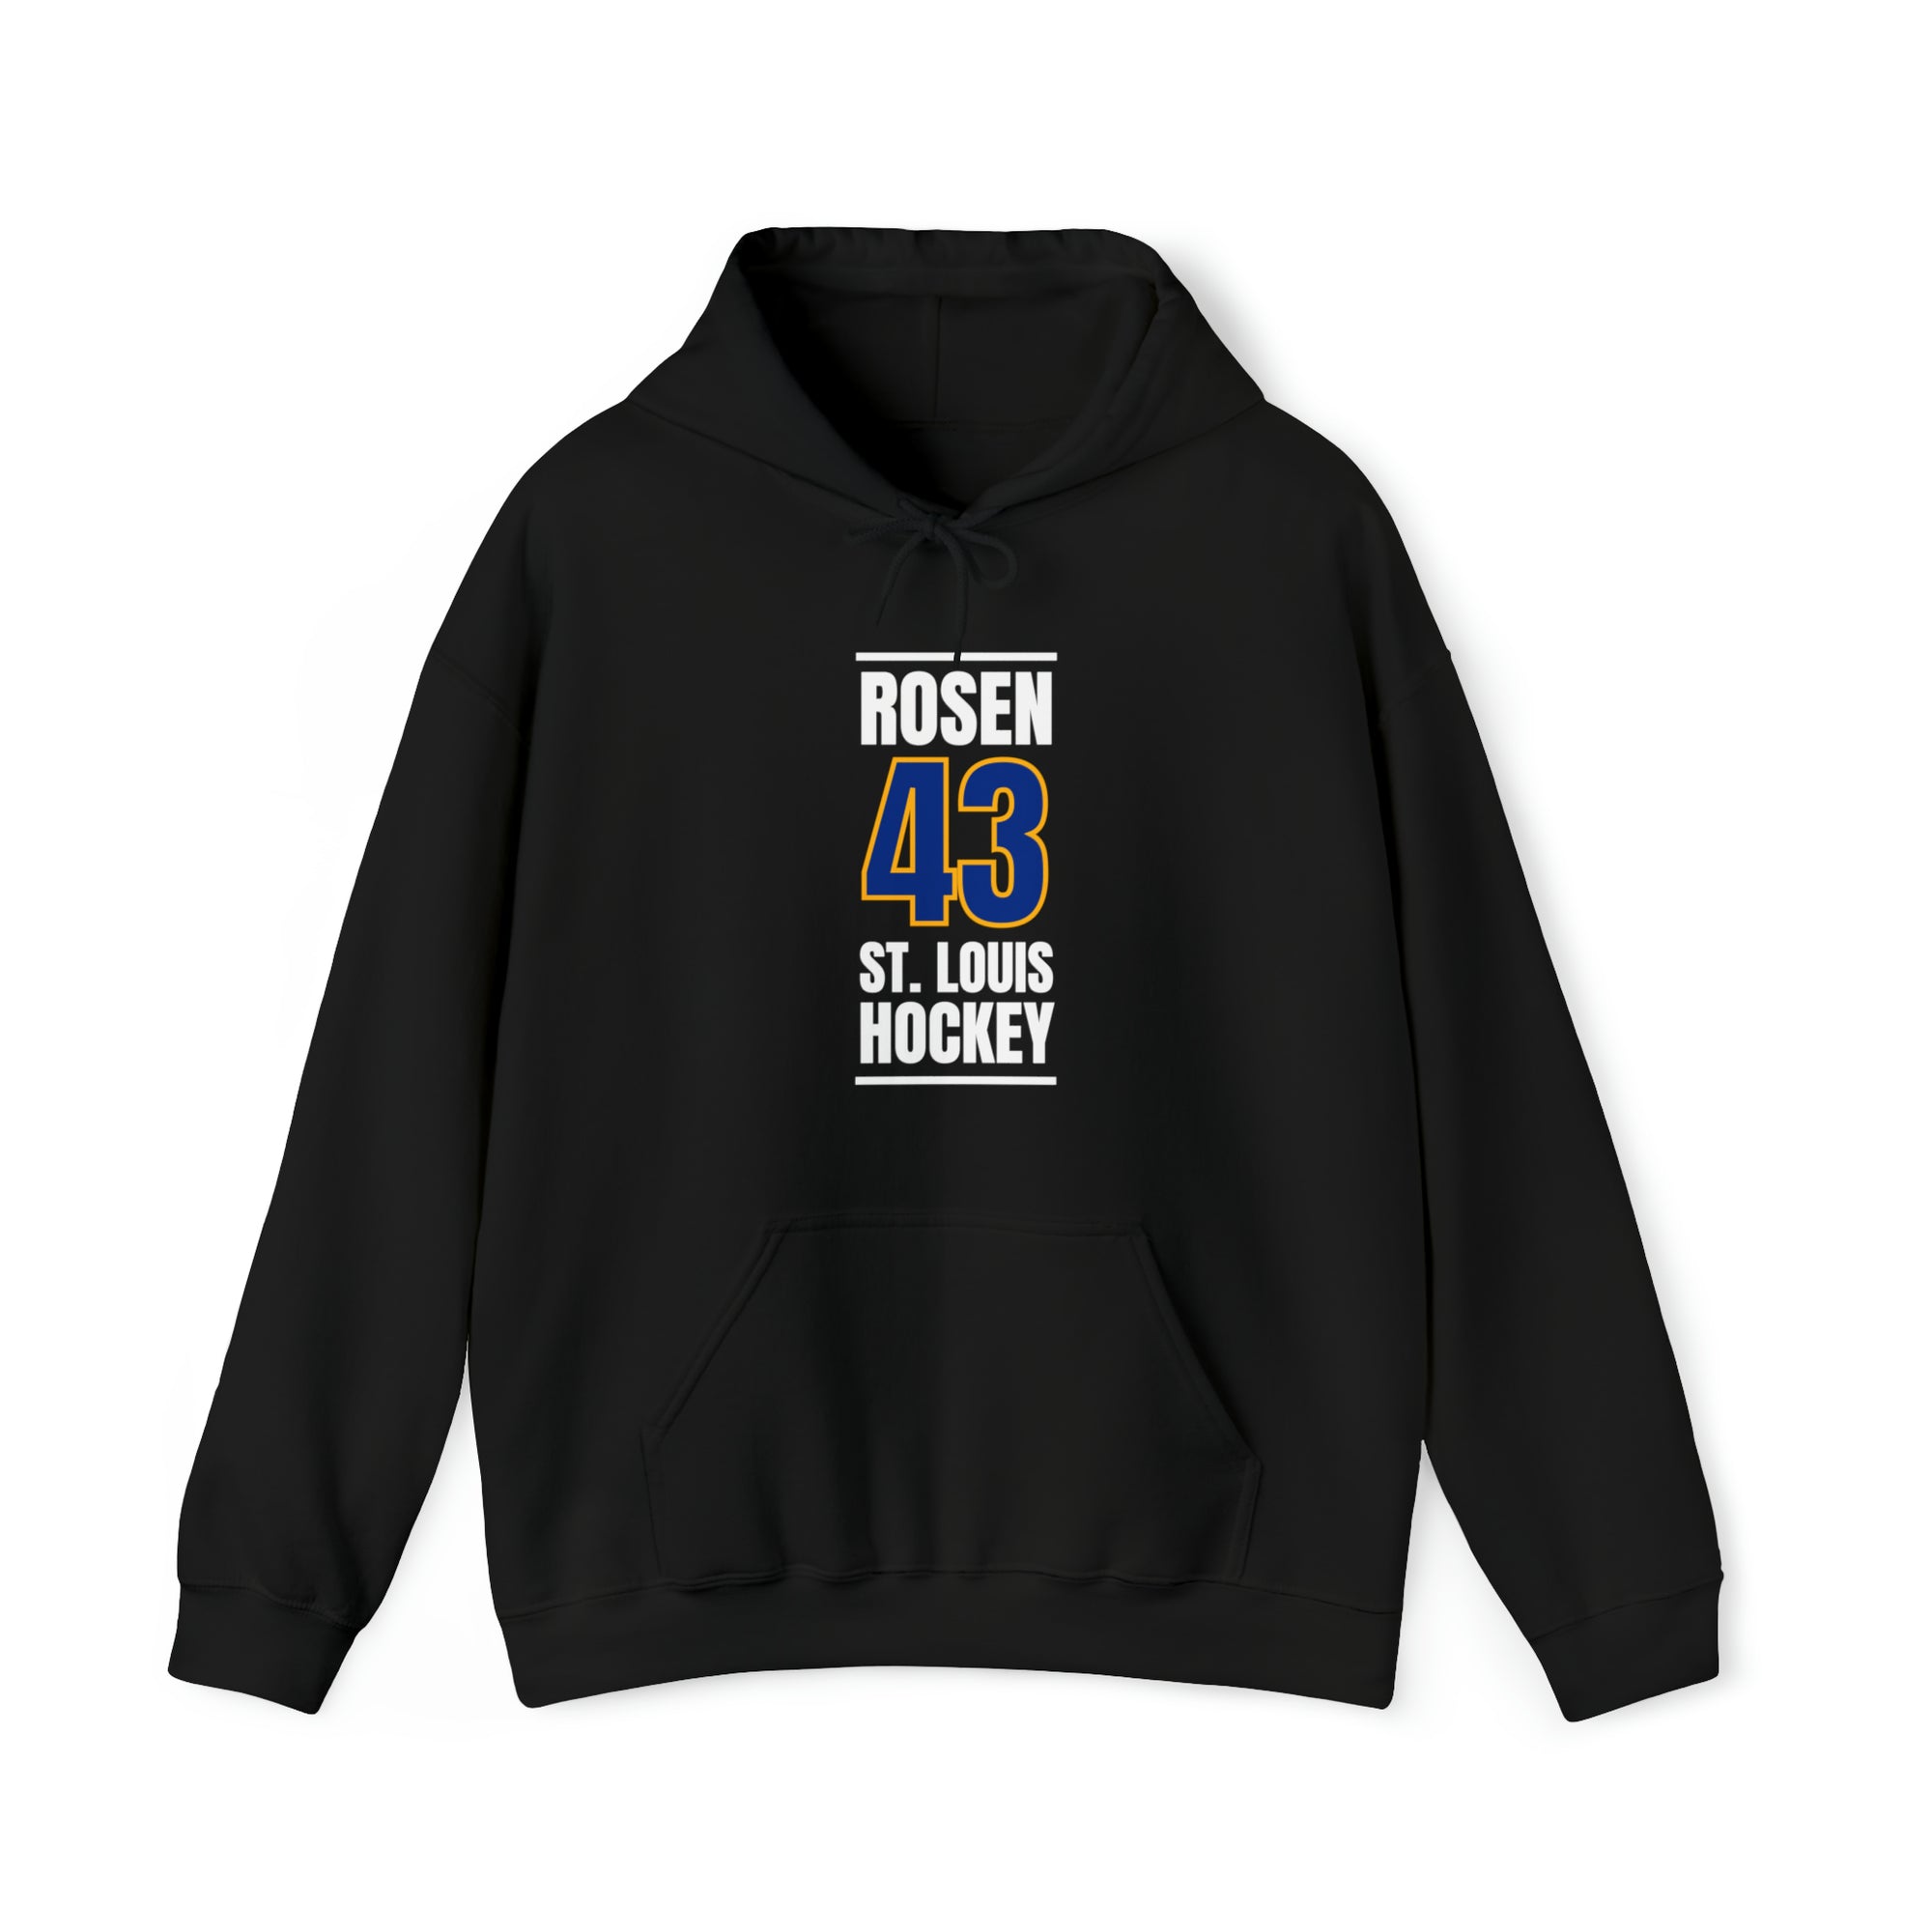 Rosen 43 St. Louis Hockey Blue Vertical Design Unisex Hooded Sweatshirt